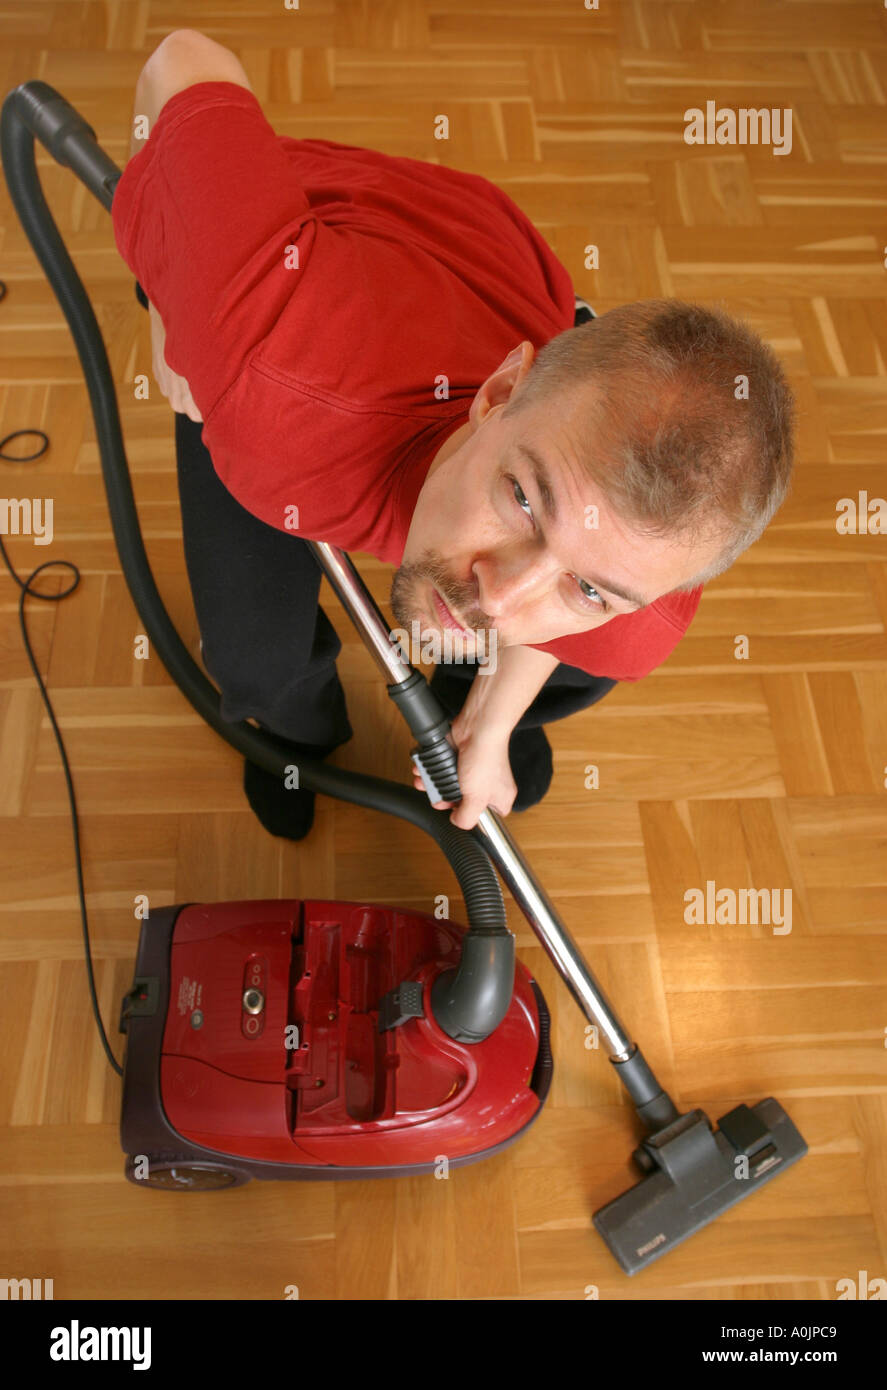 Grumpy man vacuum cleaning the floor Stock Photo